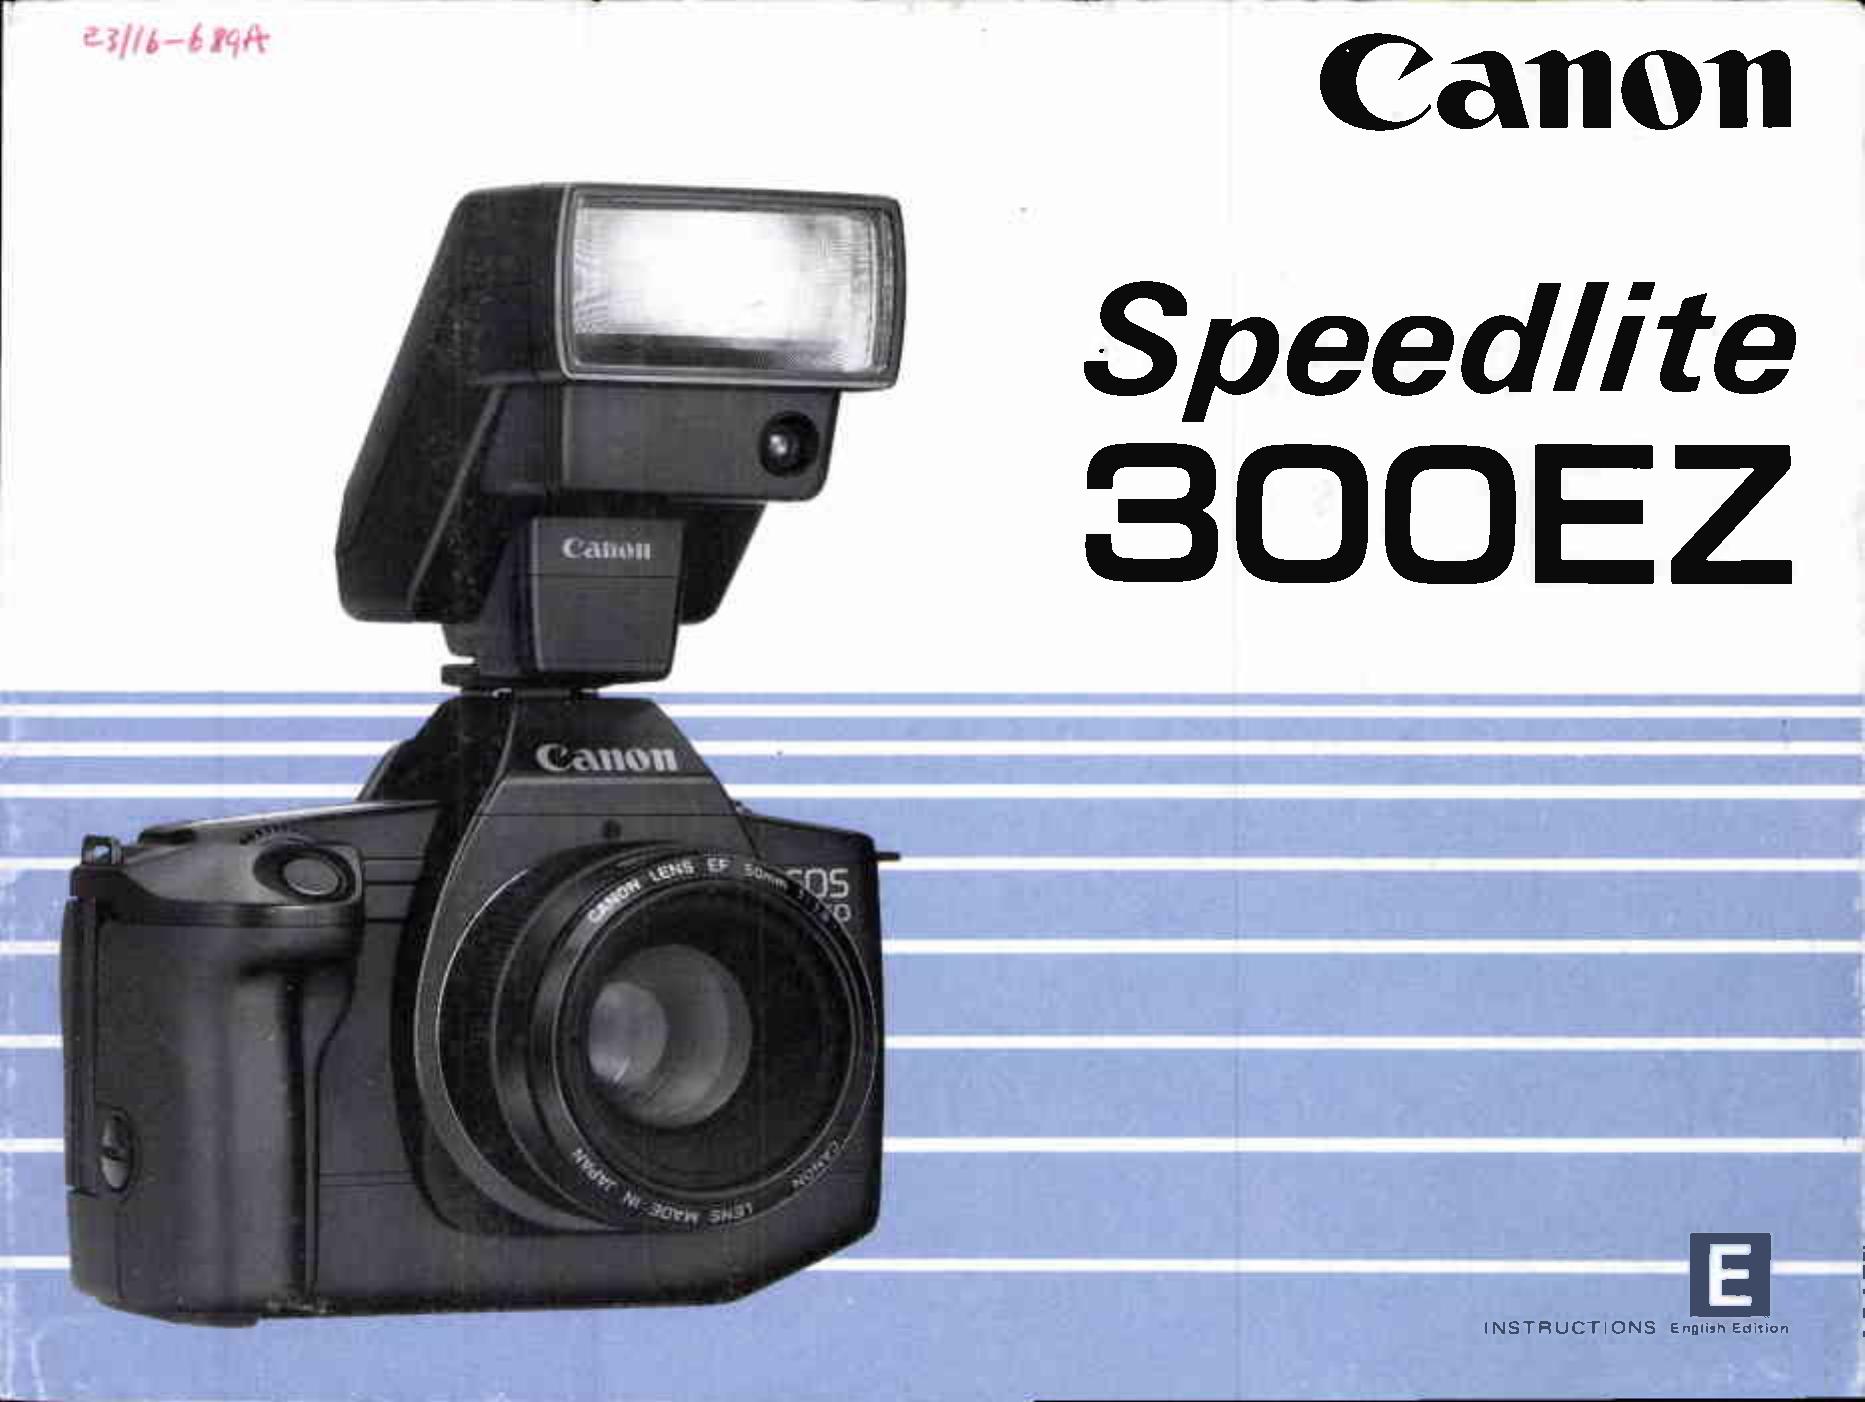 Canon 300 EZ Camera Flash User Manual